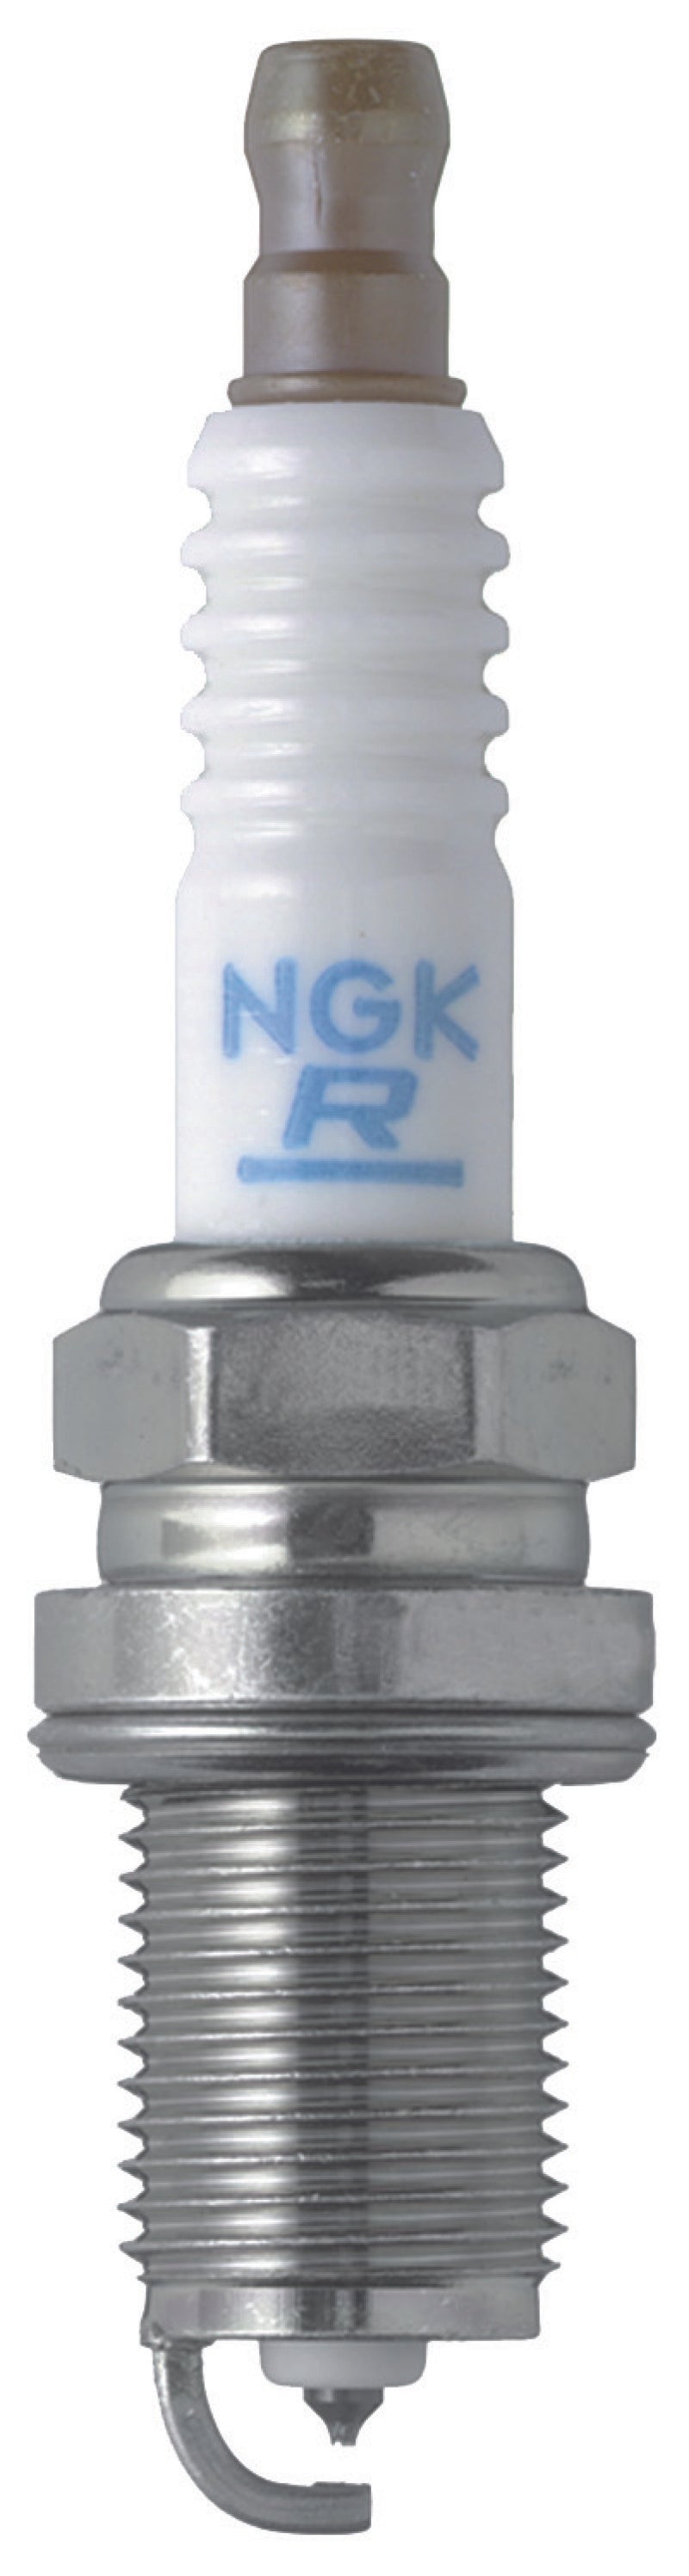 NGK Laser Platiumn Spark Plug Box of 4 (PFR7G-11S).